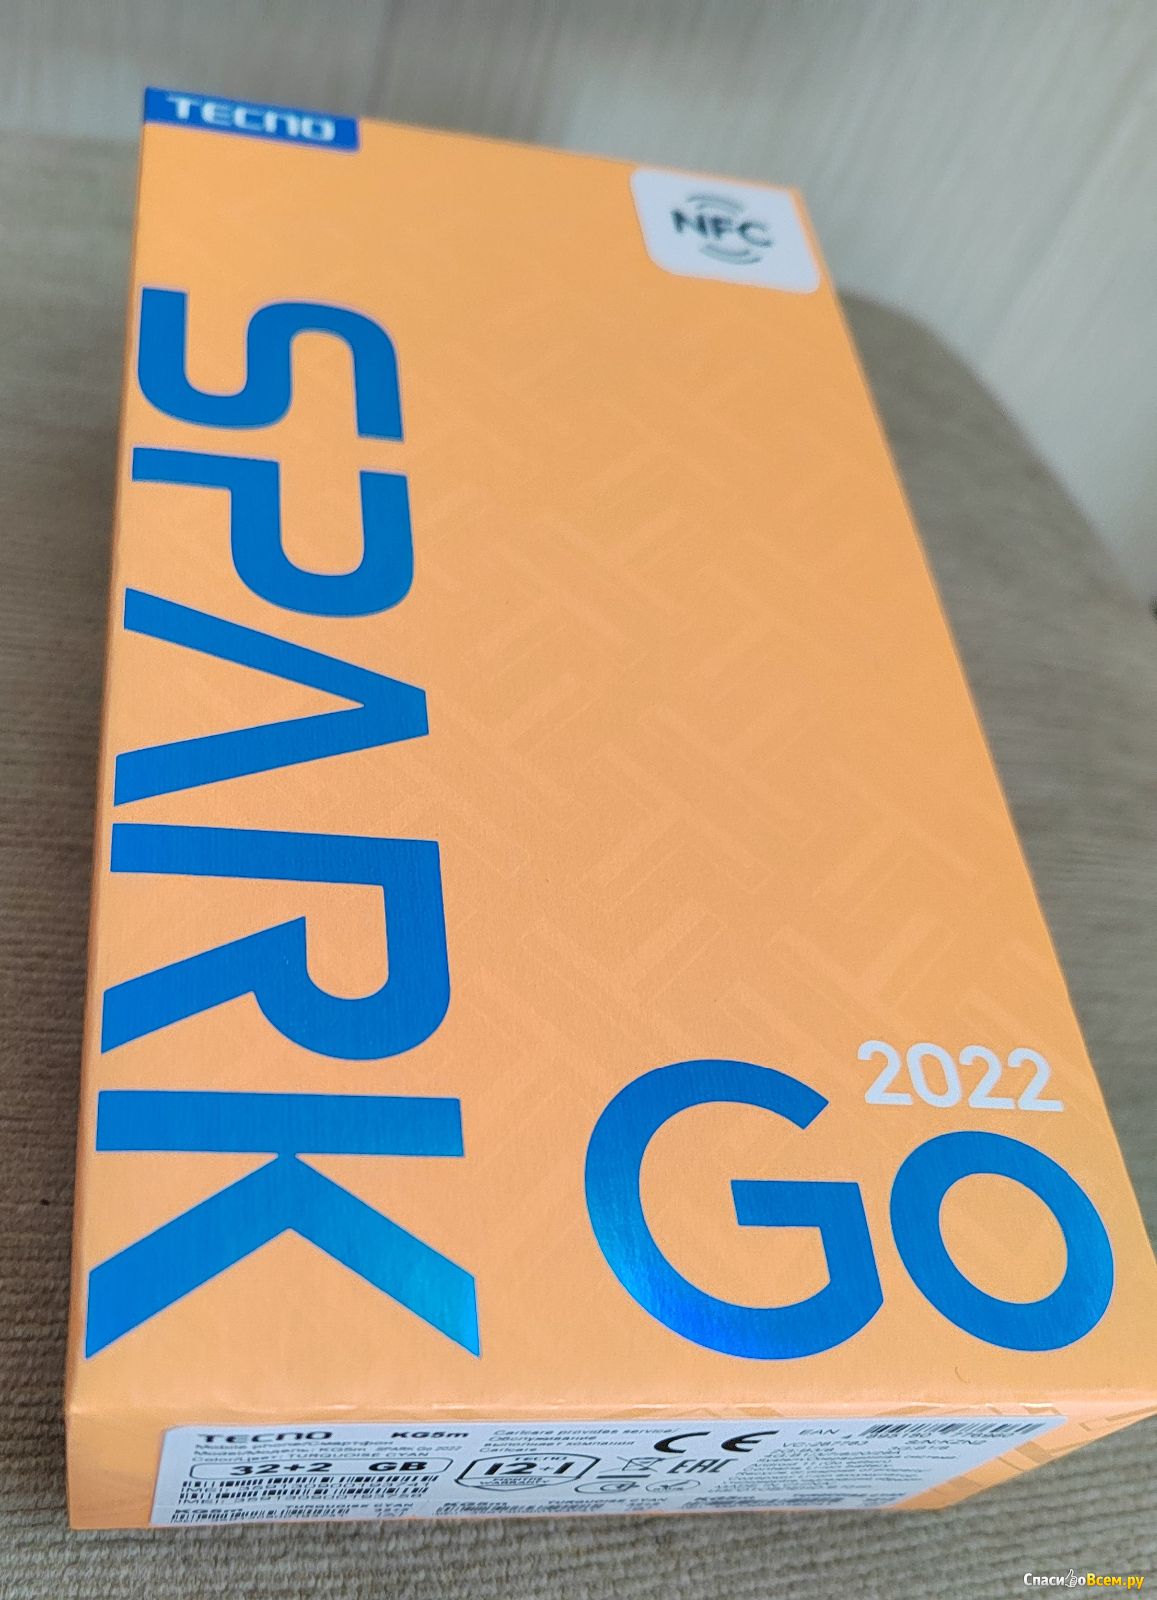 Bg6 techno spark go 2024. Texno Spark go 2022. Упаковка смартфона Techno Spark go 2024. Texno Spark go 2022 narxi. Texno Spark go 2023.